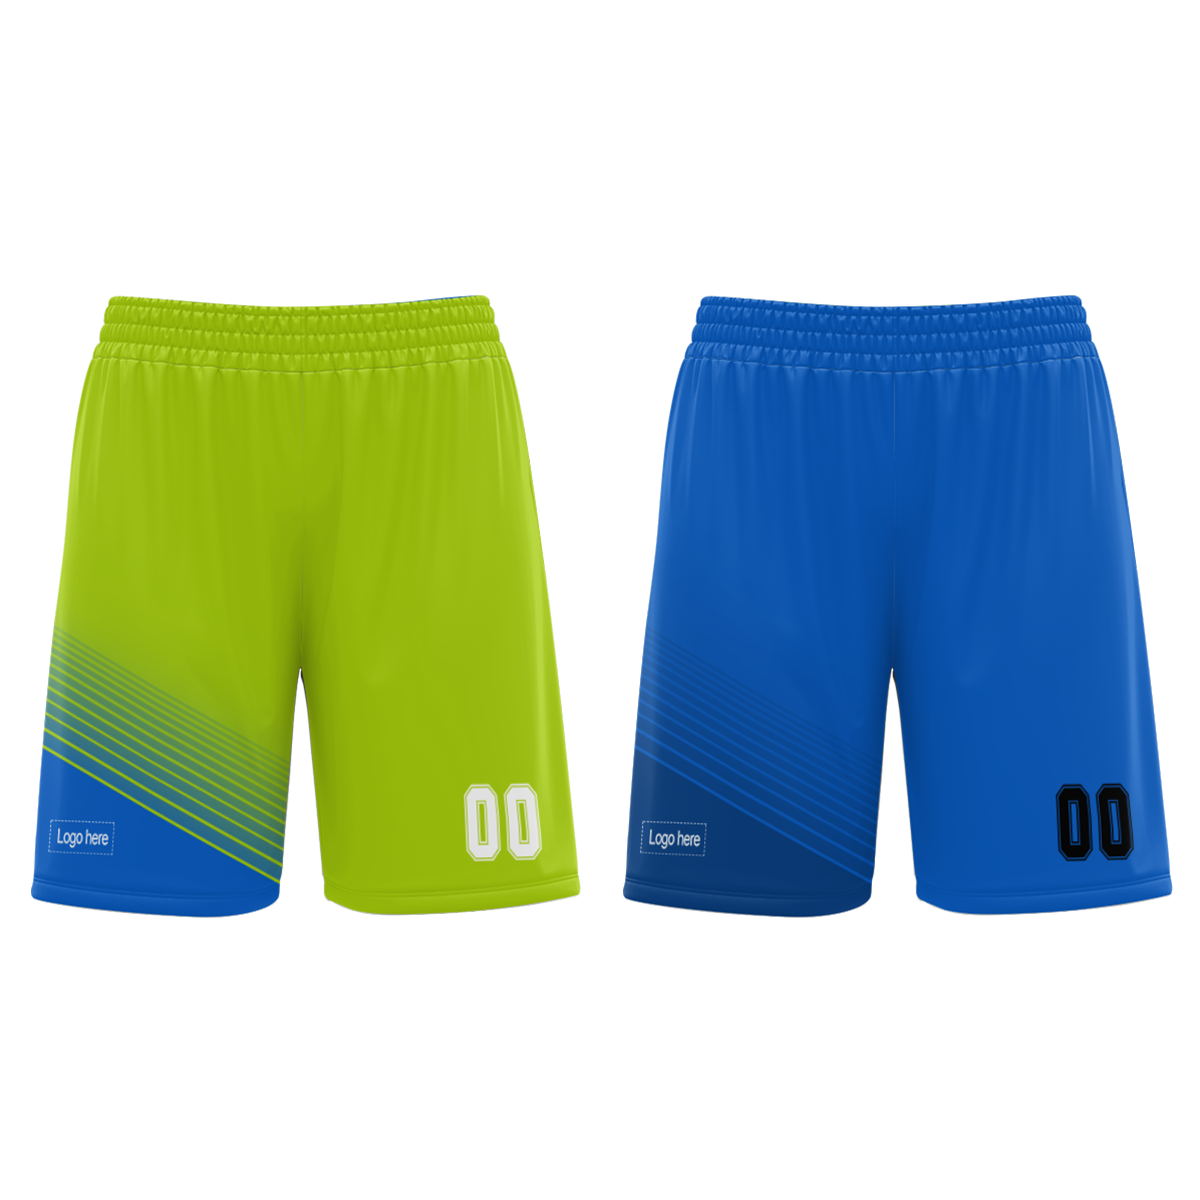 wholesale-mens-basketball-jerseys-custom-printing-on-demand-polyester-reversible-basketball-shirts-at-cj-pod-7